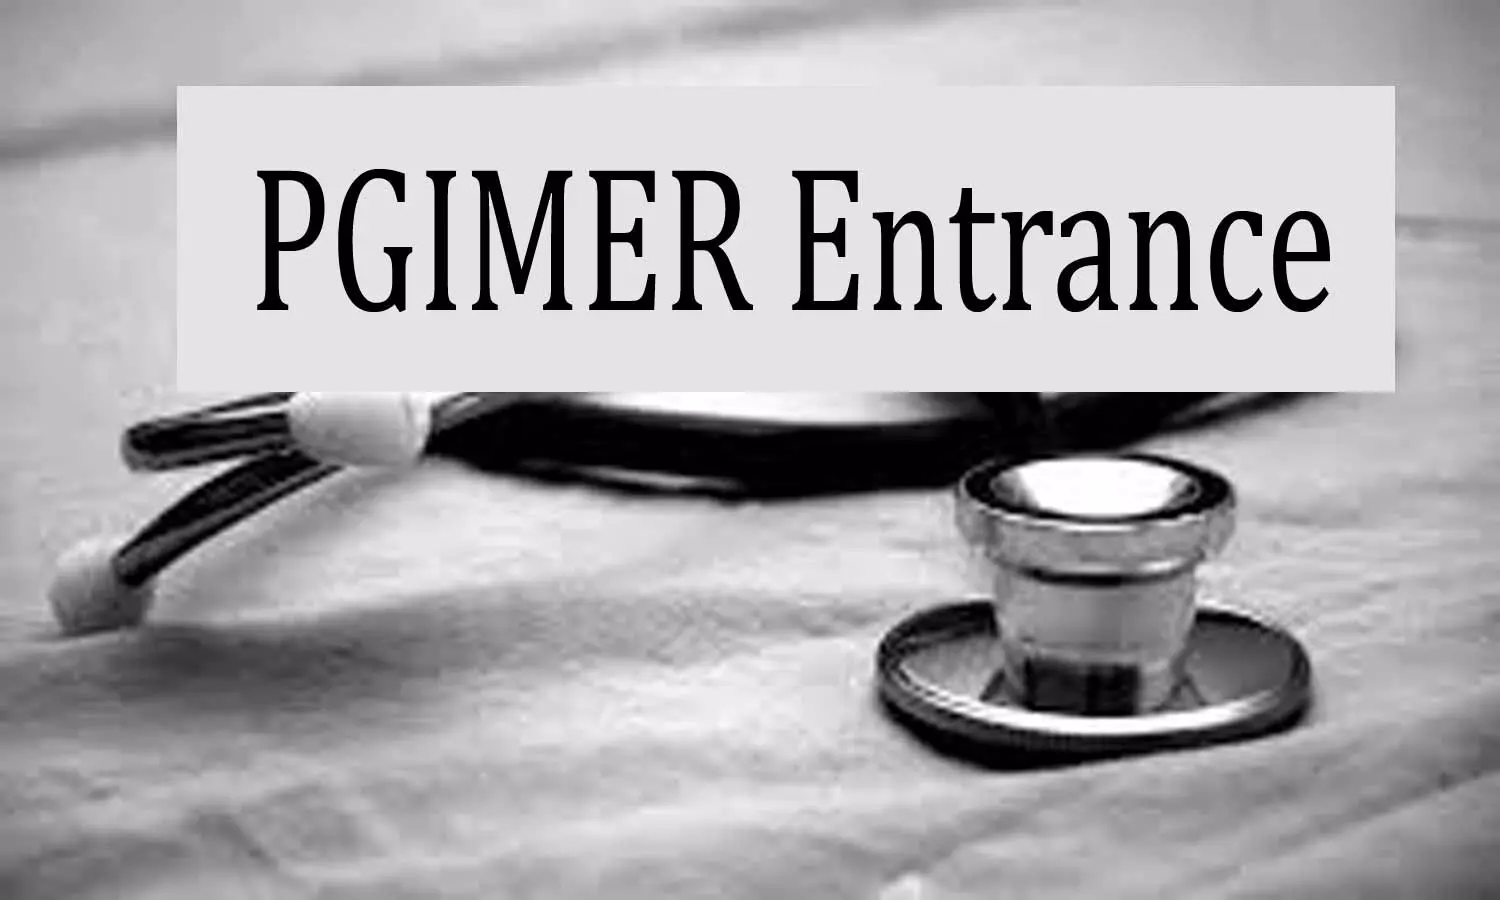 PGIMER releases result of MSc Nursing entrance examination